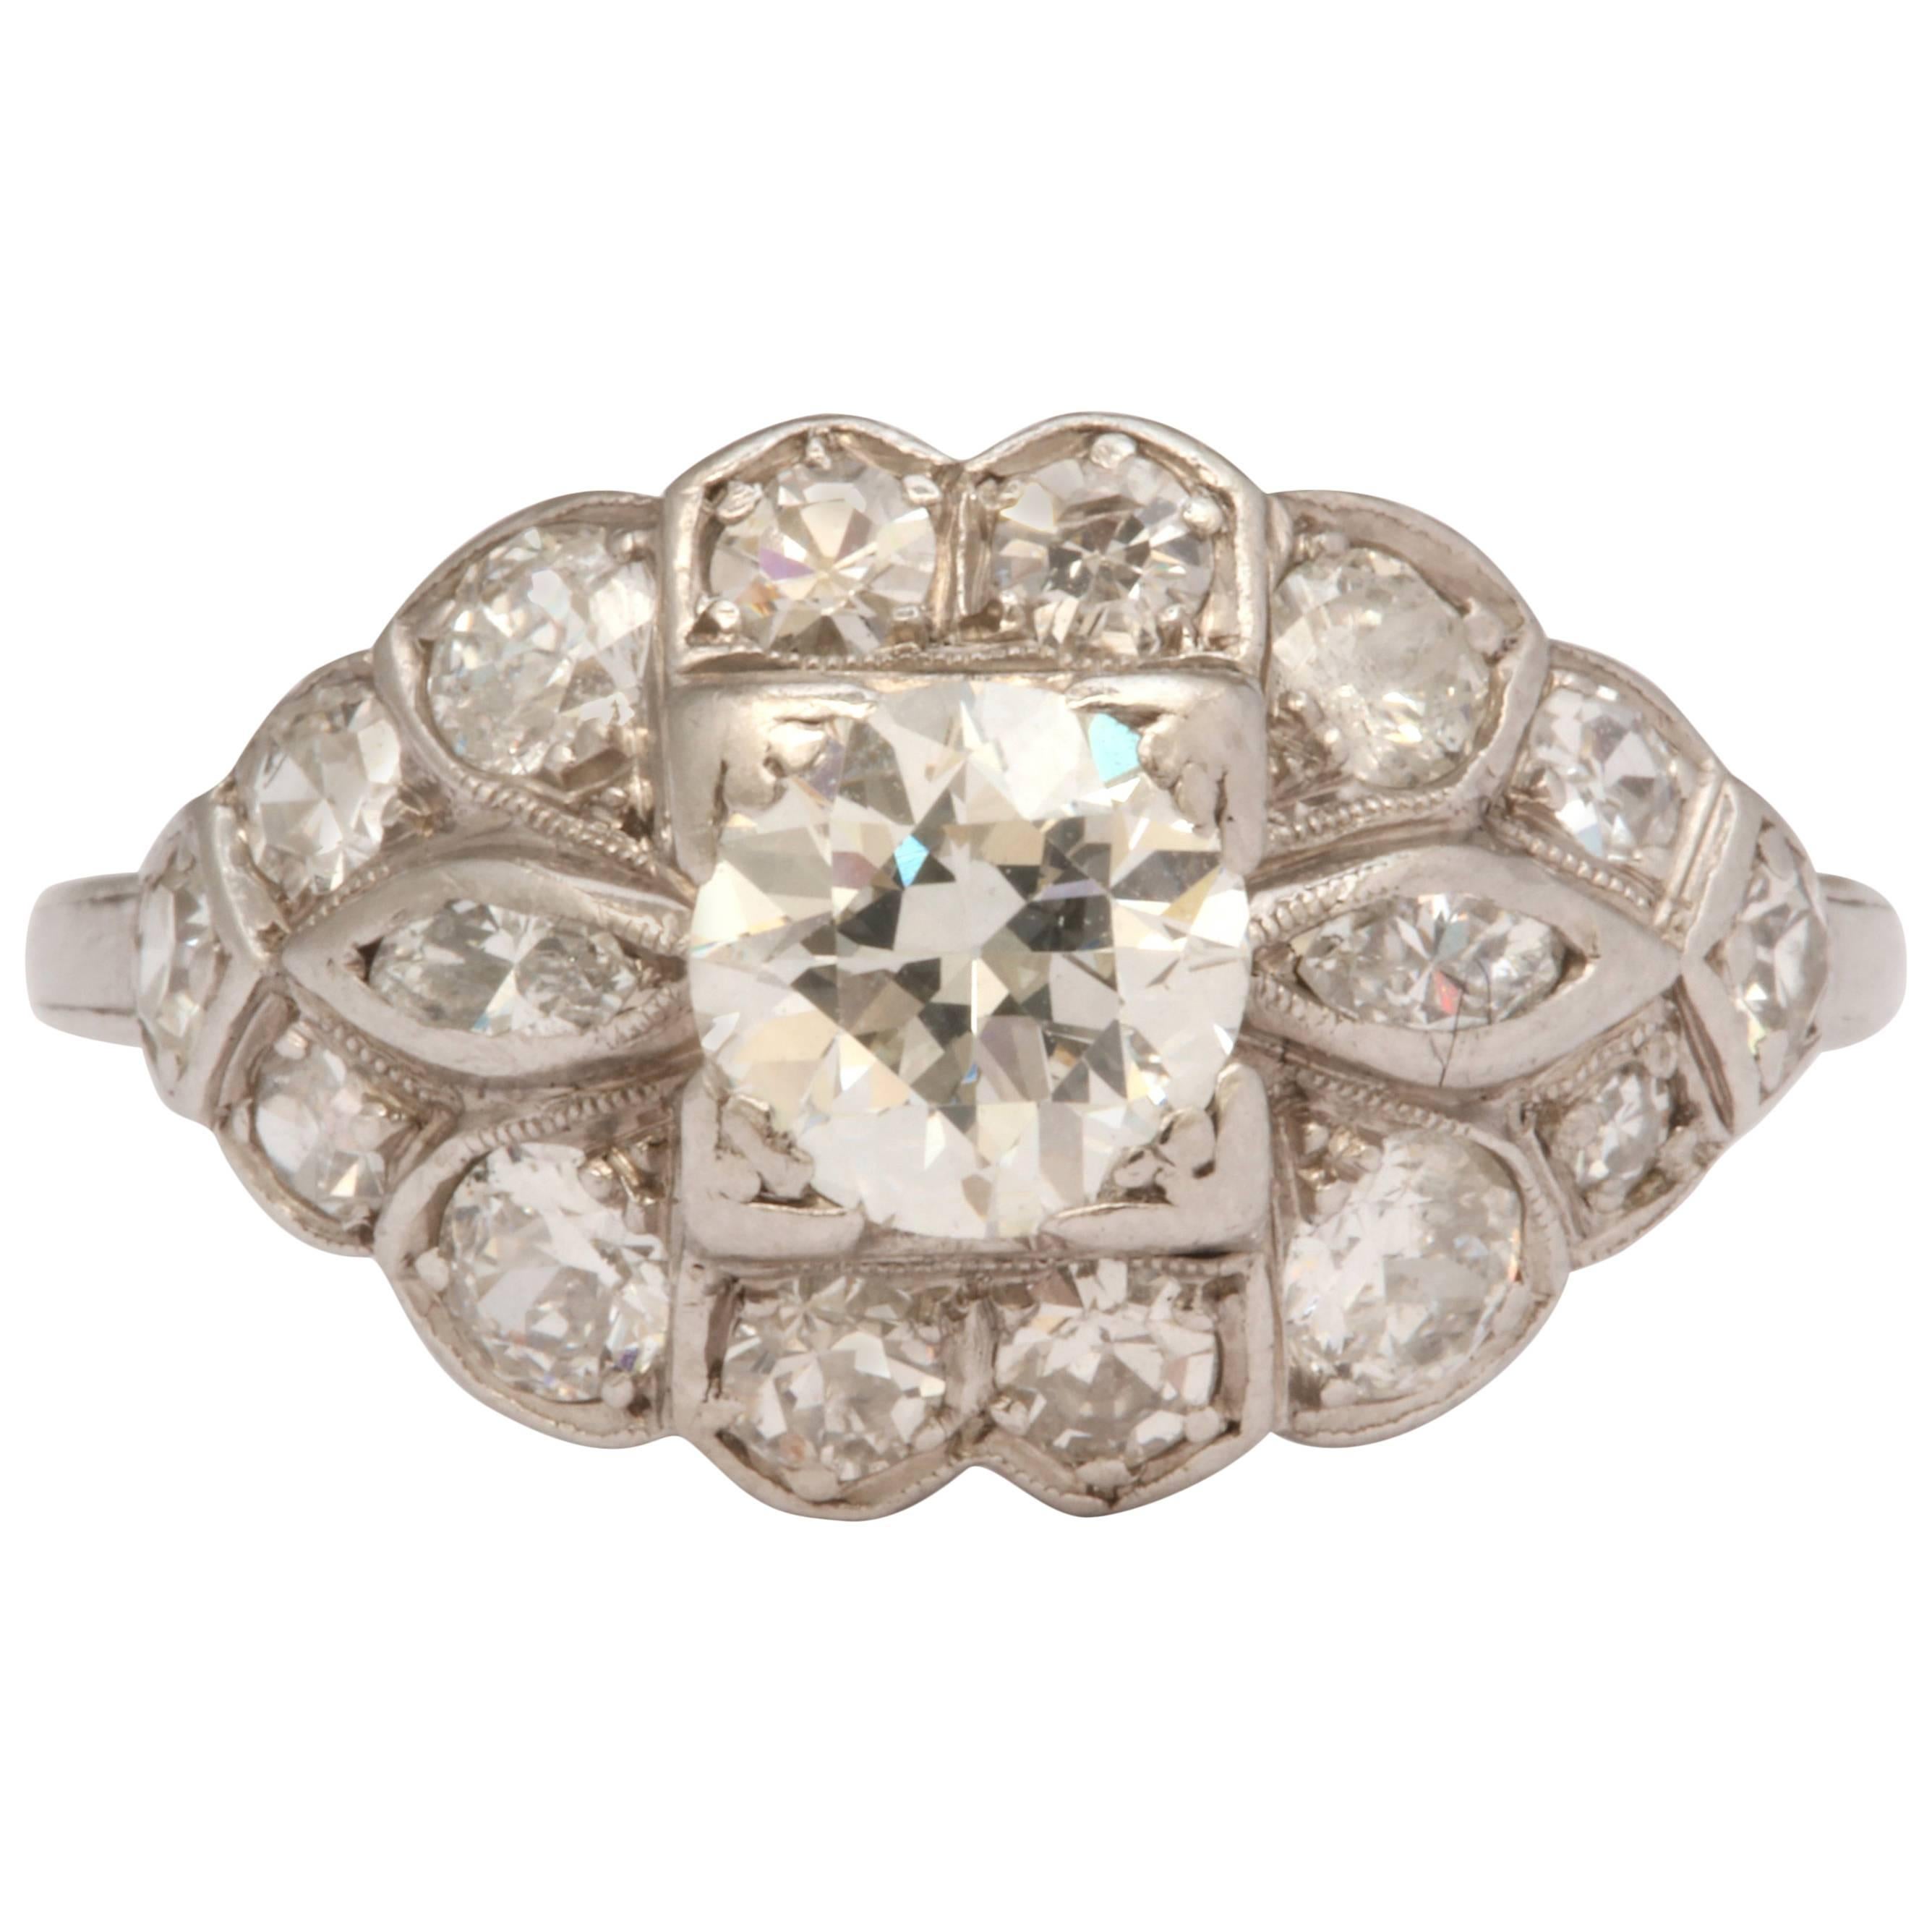 Art Deco Engagement Ring